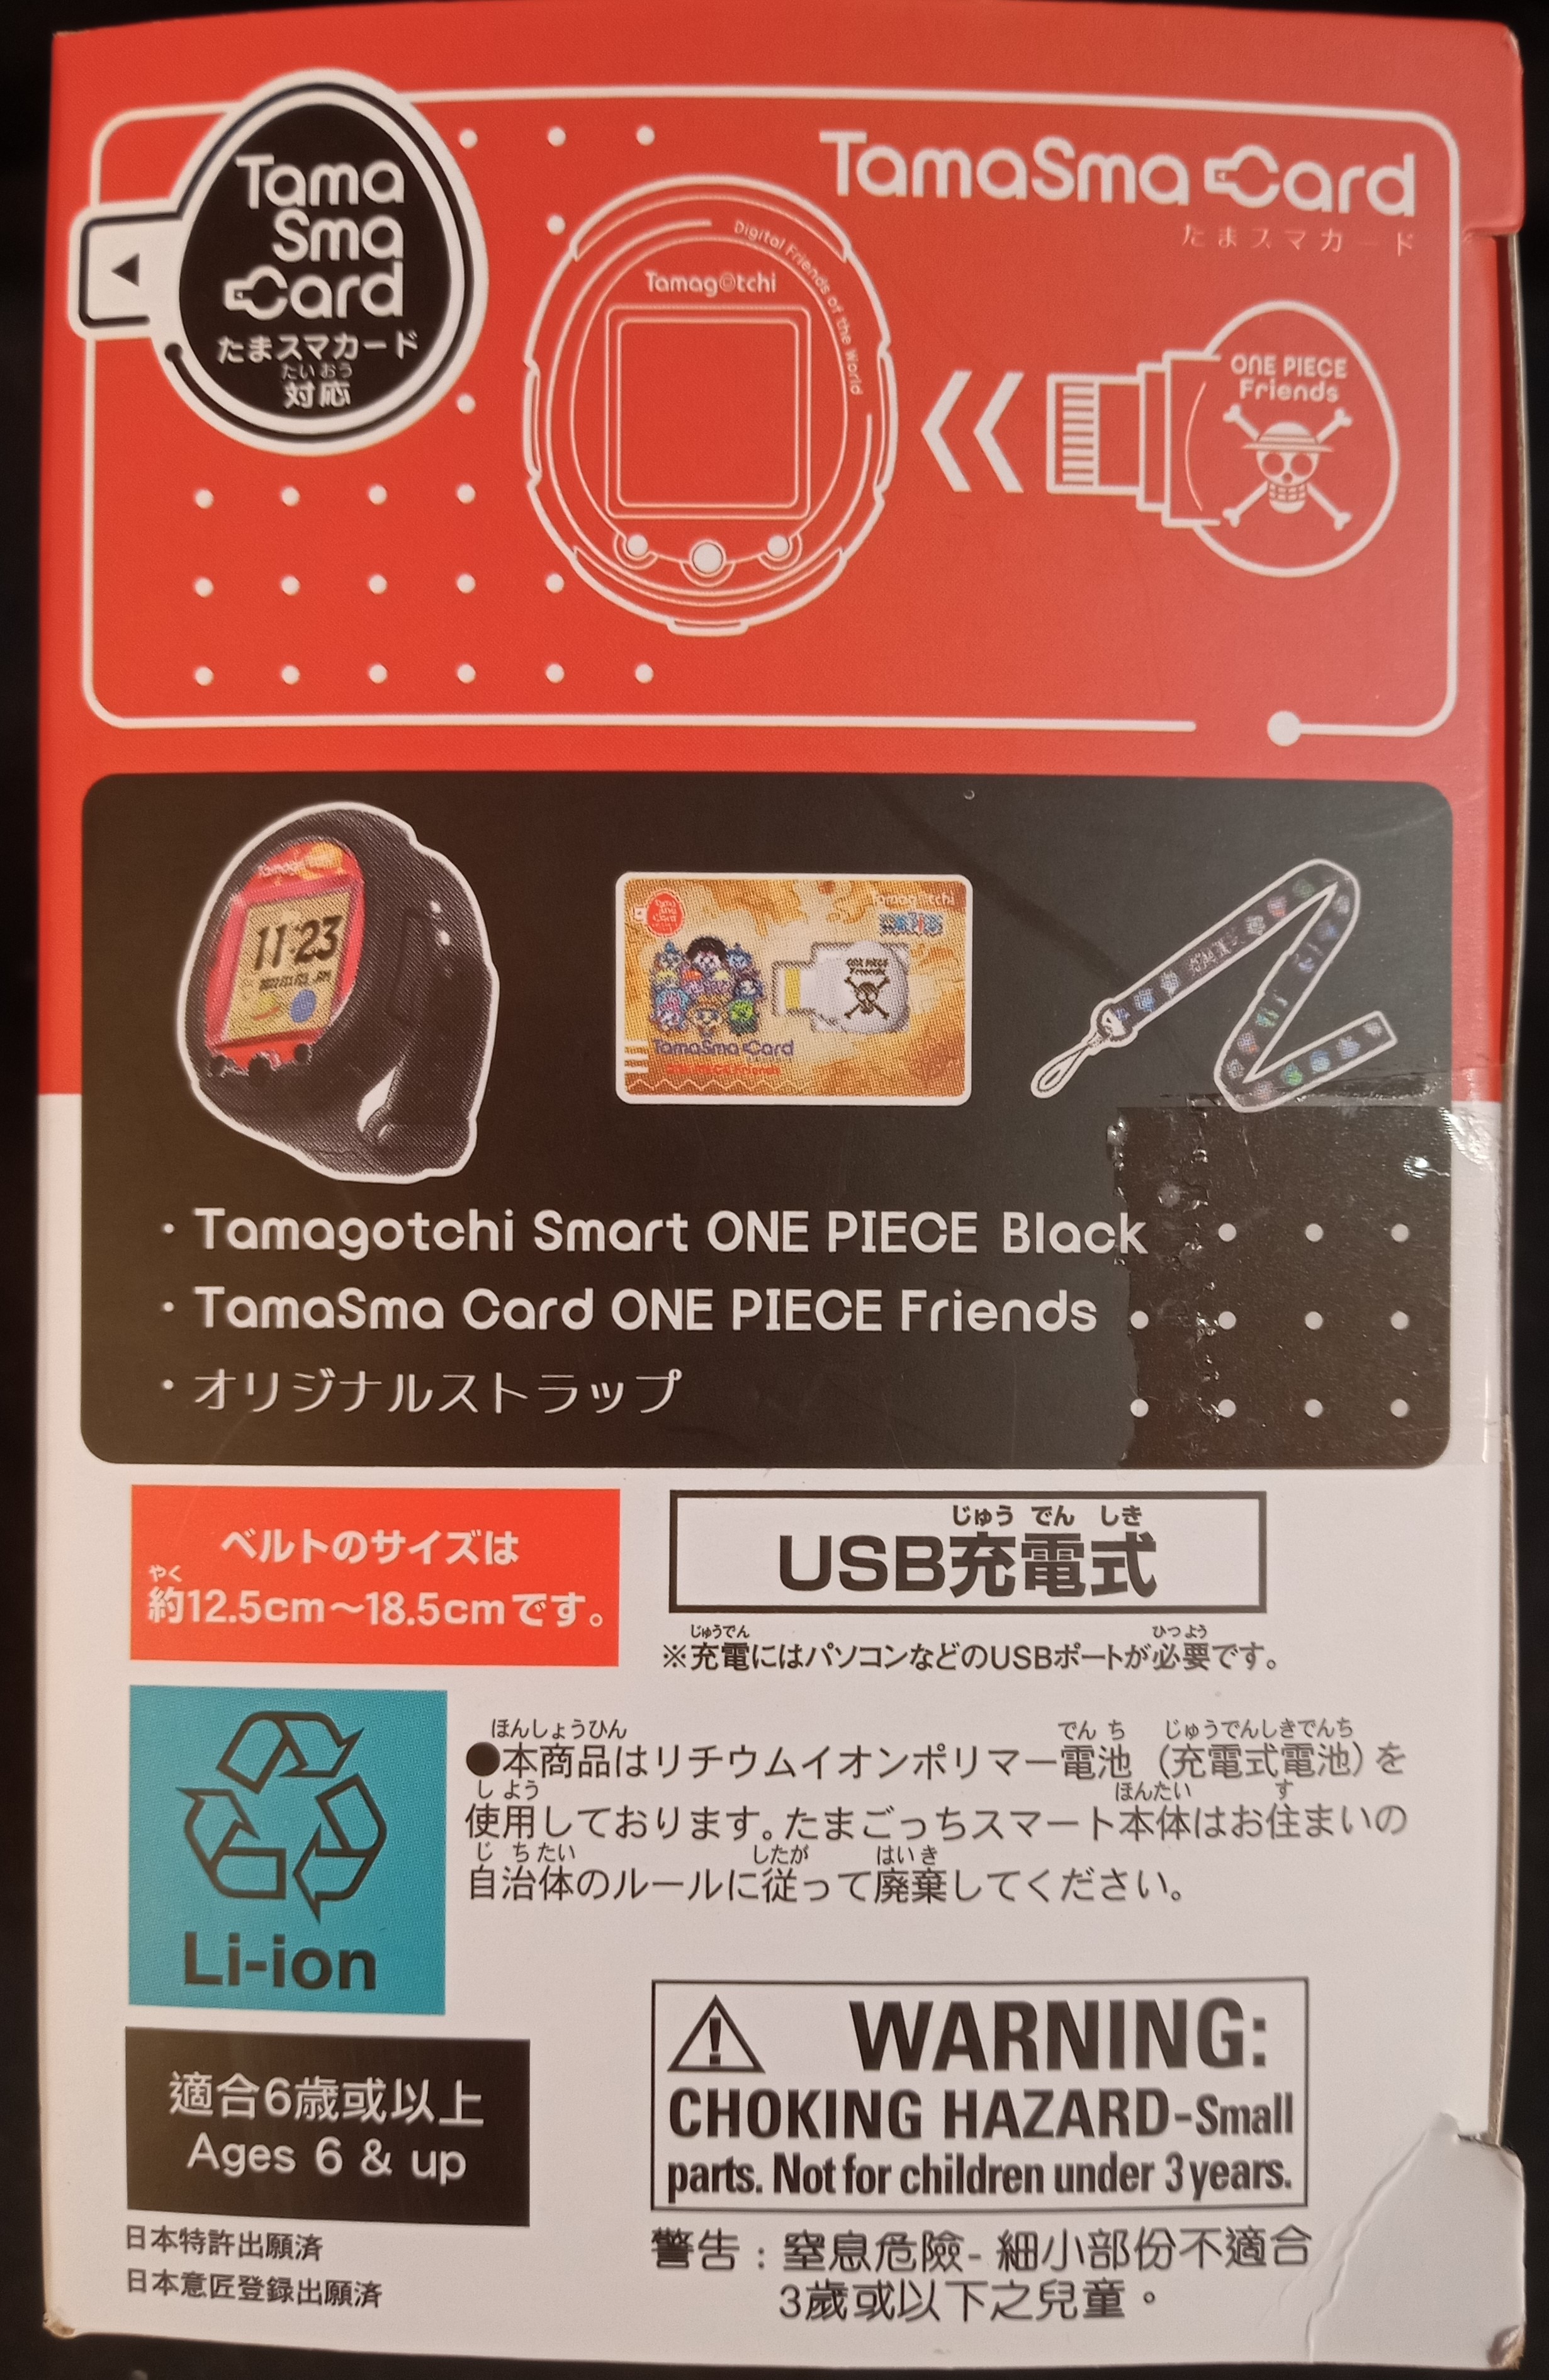 Tamagotchi Smart Watch One Piece Special Set New Bandai